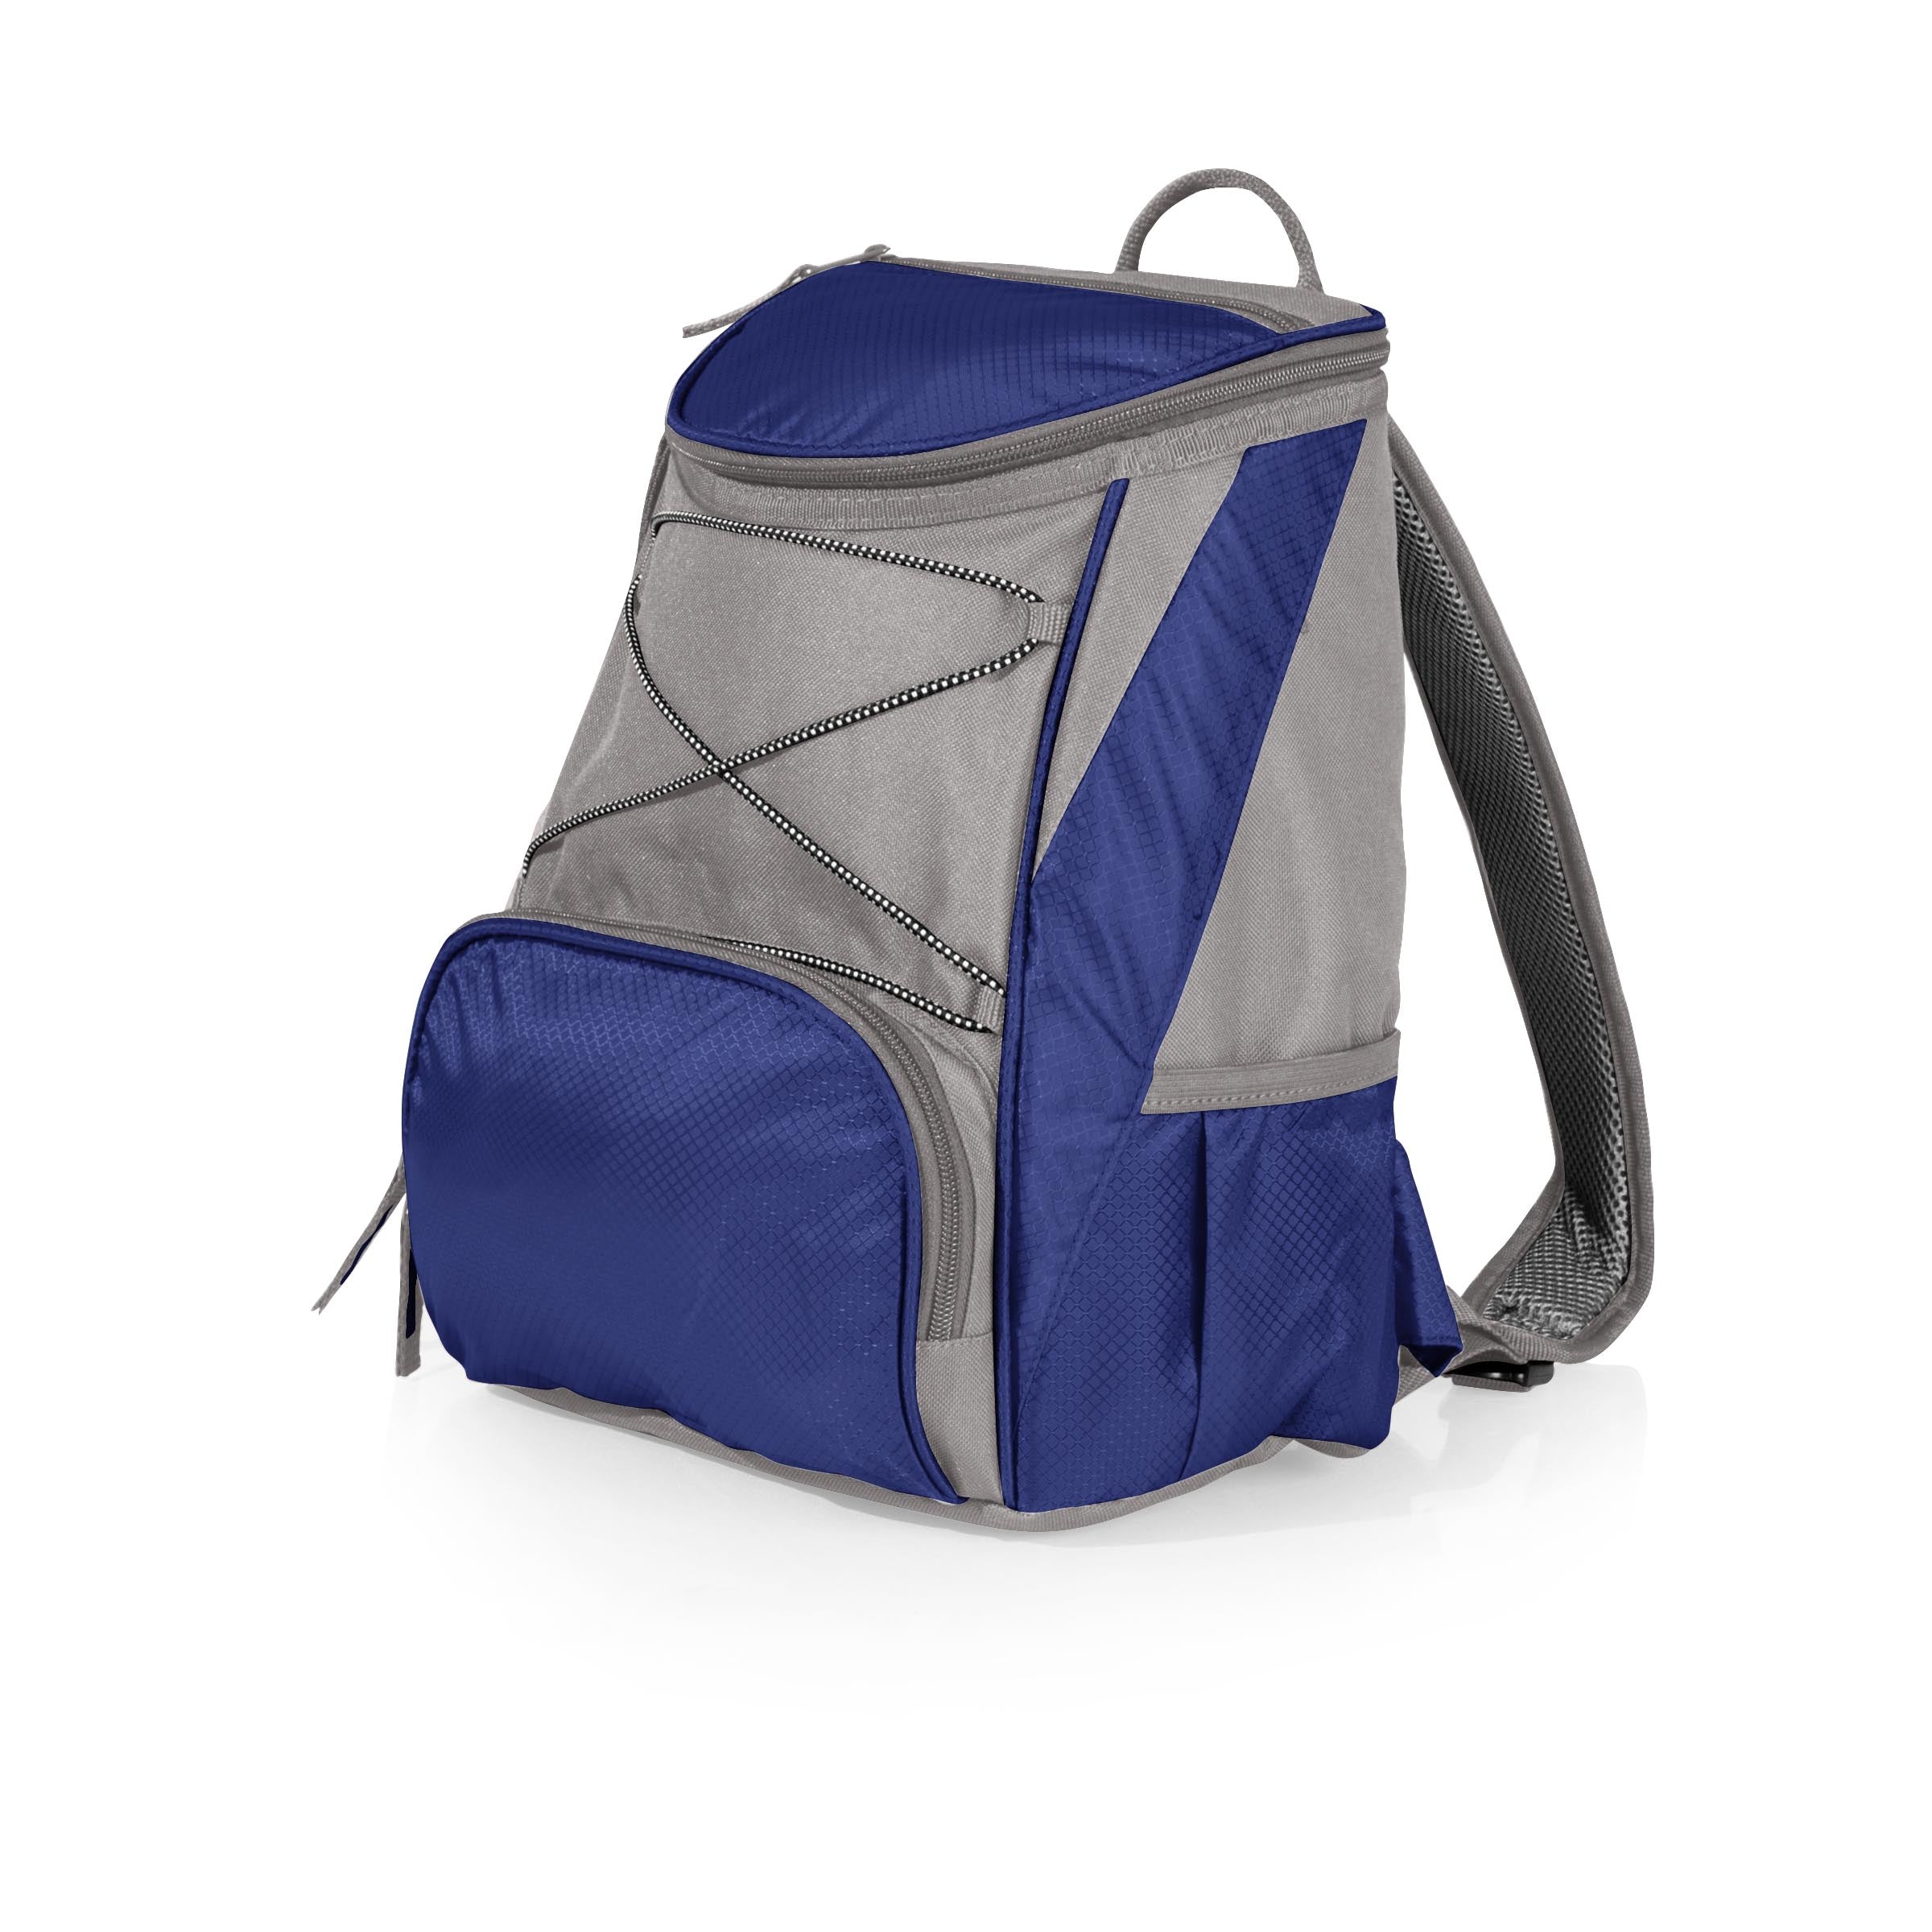 New York Mets - PTX Backpack Cooler